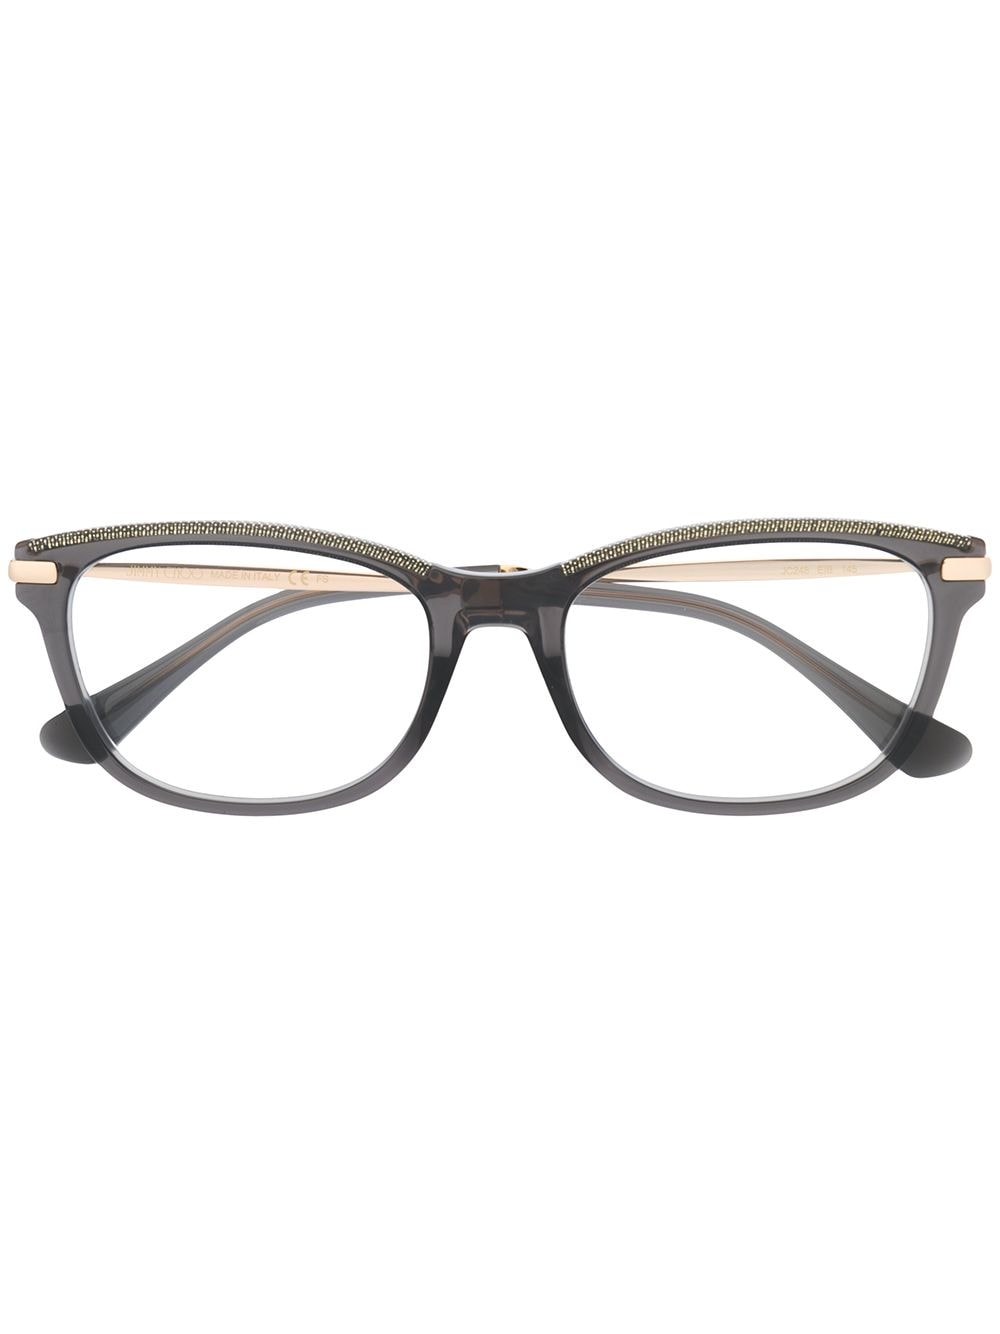 Jimmy Choo Eyewear angular glasses - Black von Jimmy Choo Eyewear